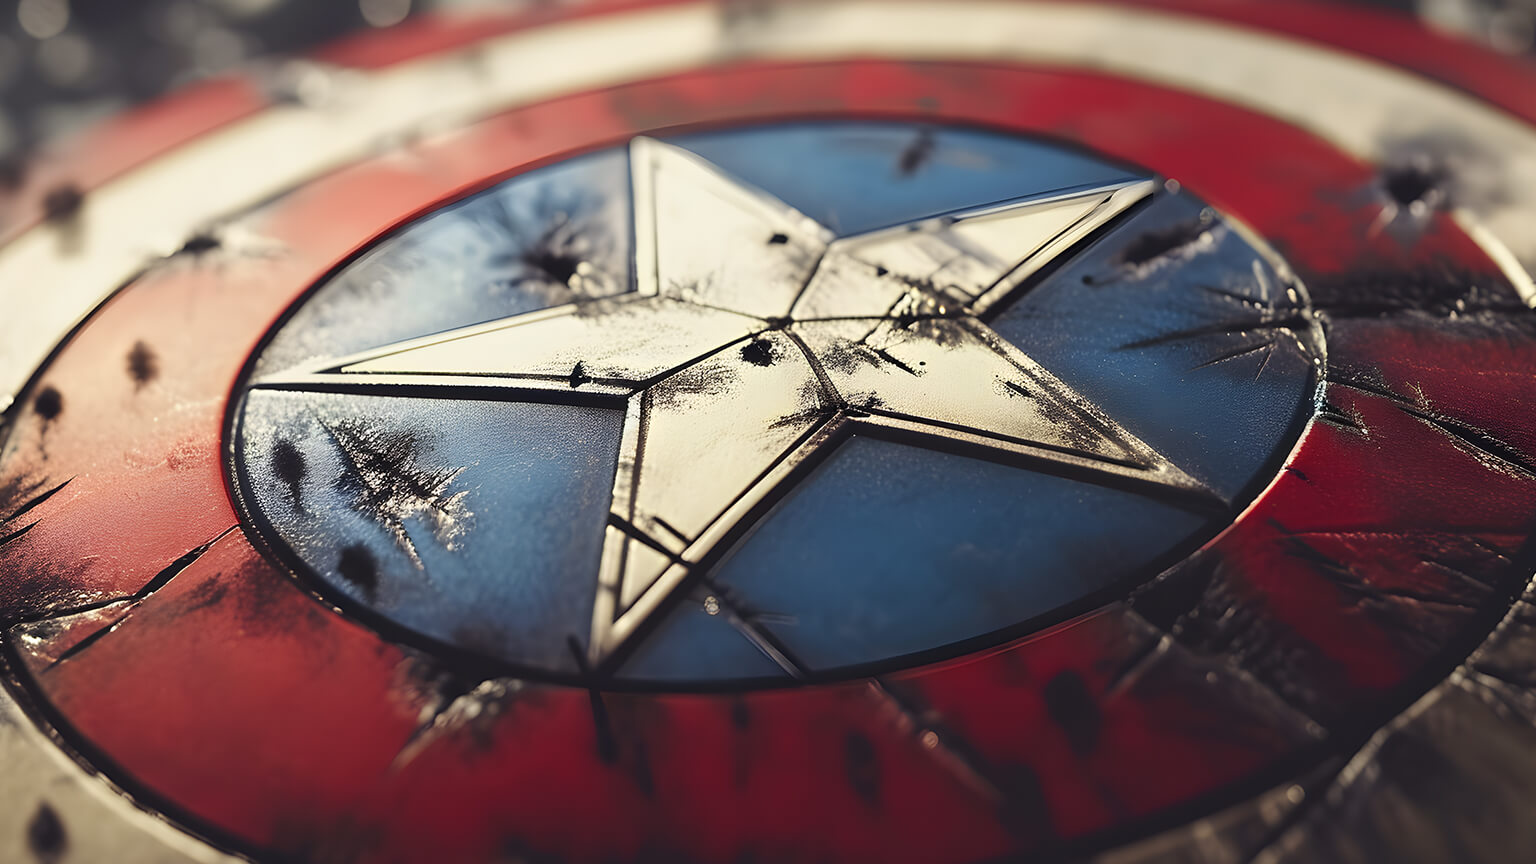 marvel broken captain america shield desktop wallpaper preview